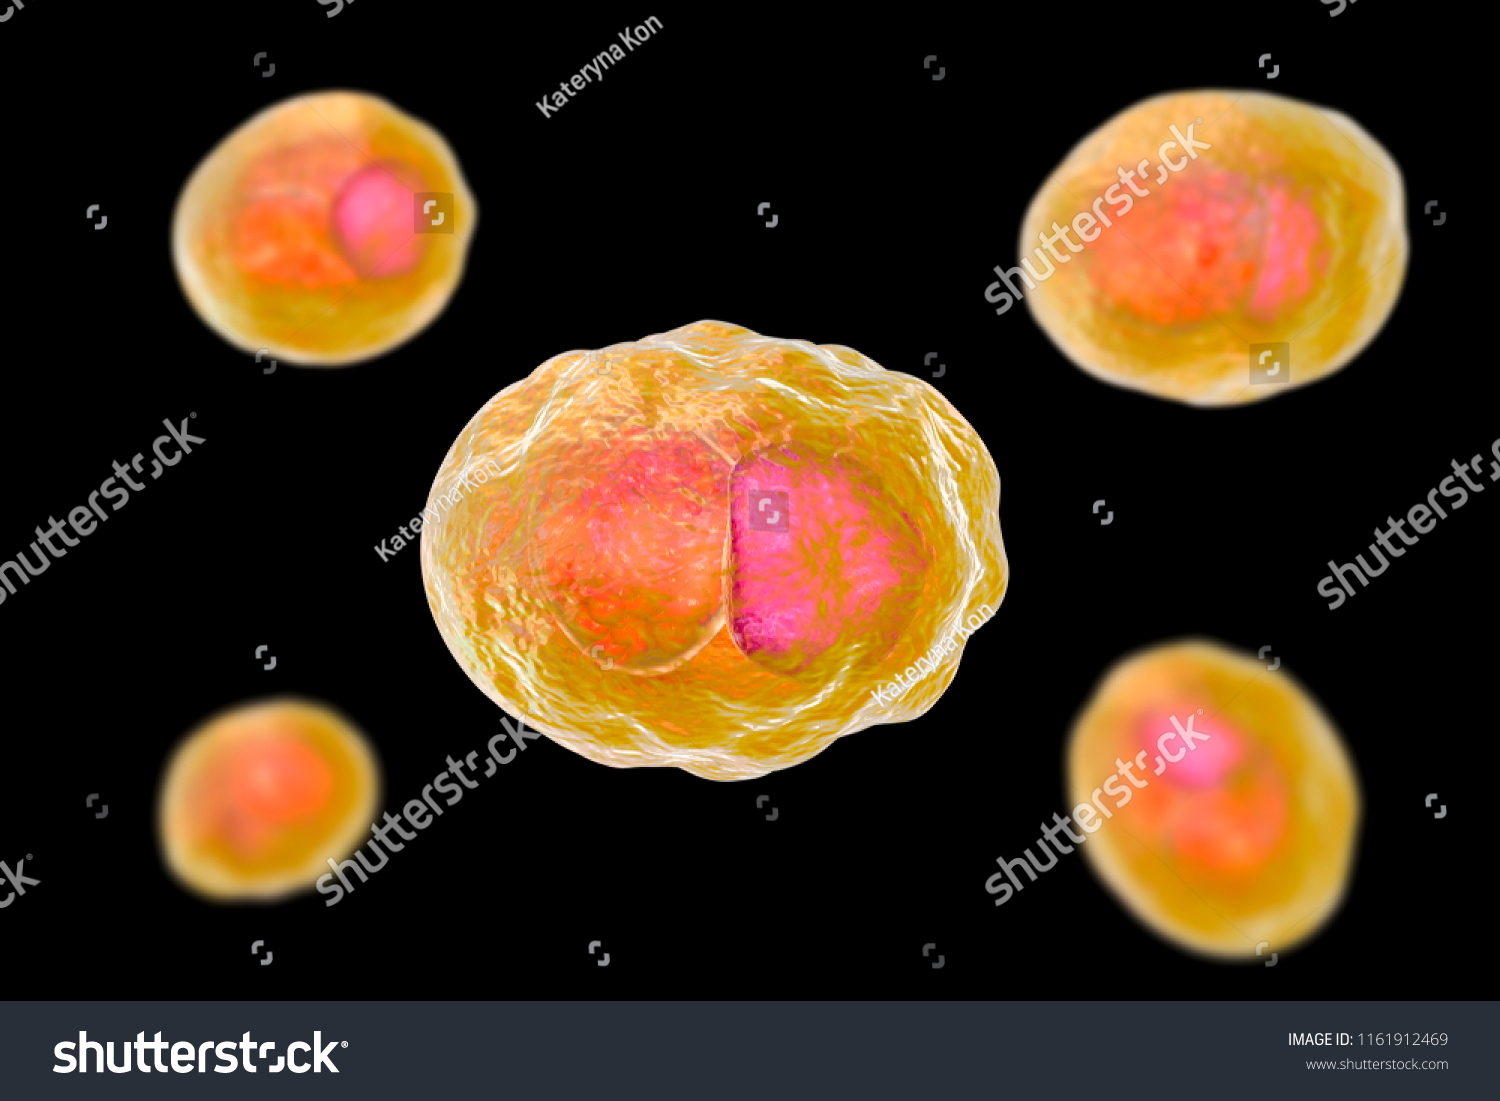 Chlamydia Trachomatis Bacteria 3d Illustration Showing Stock Illustration 1161912469 Shutterstock 4947